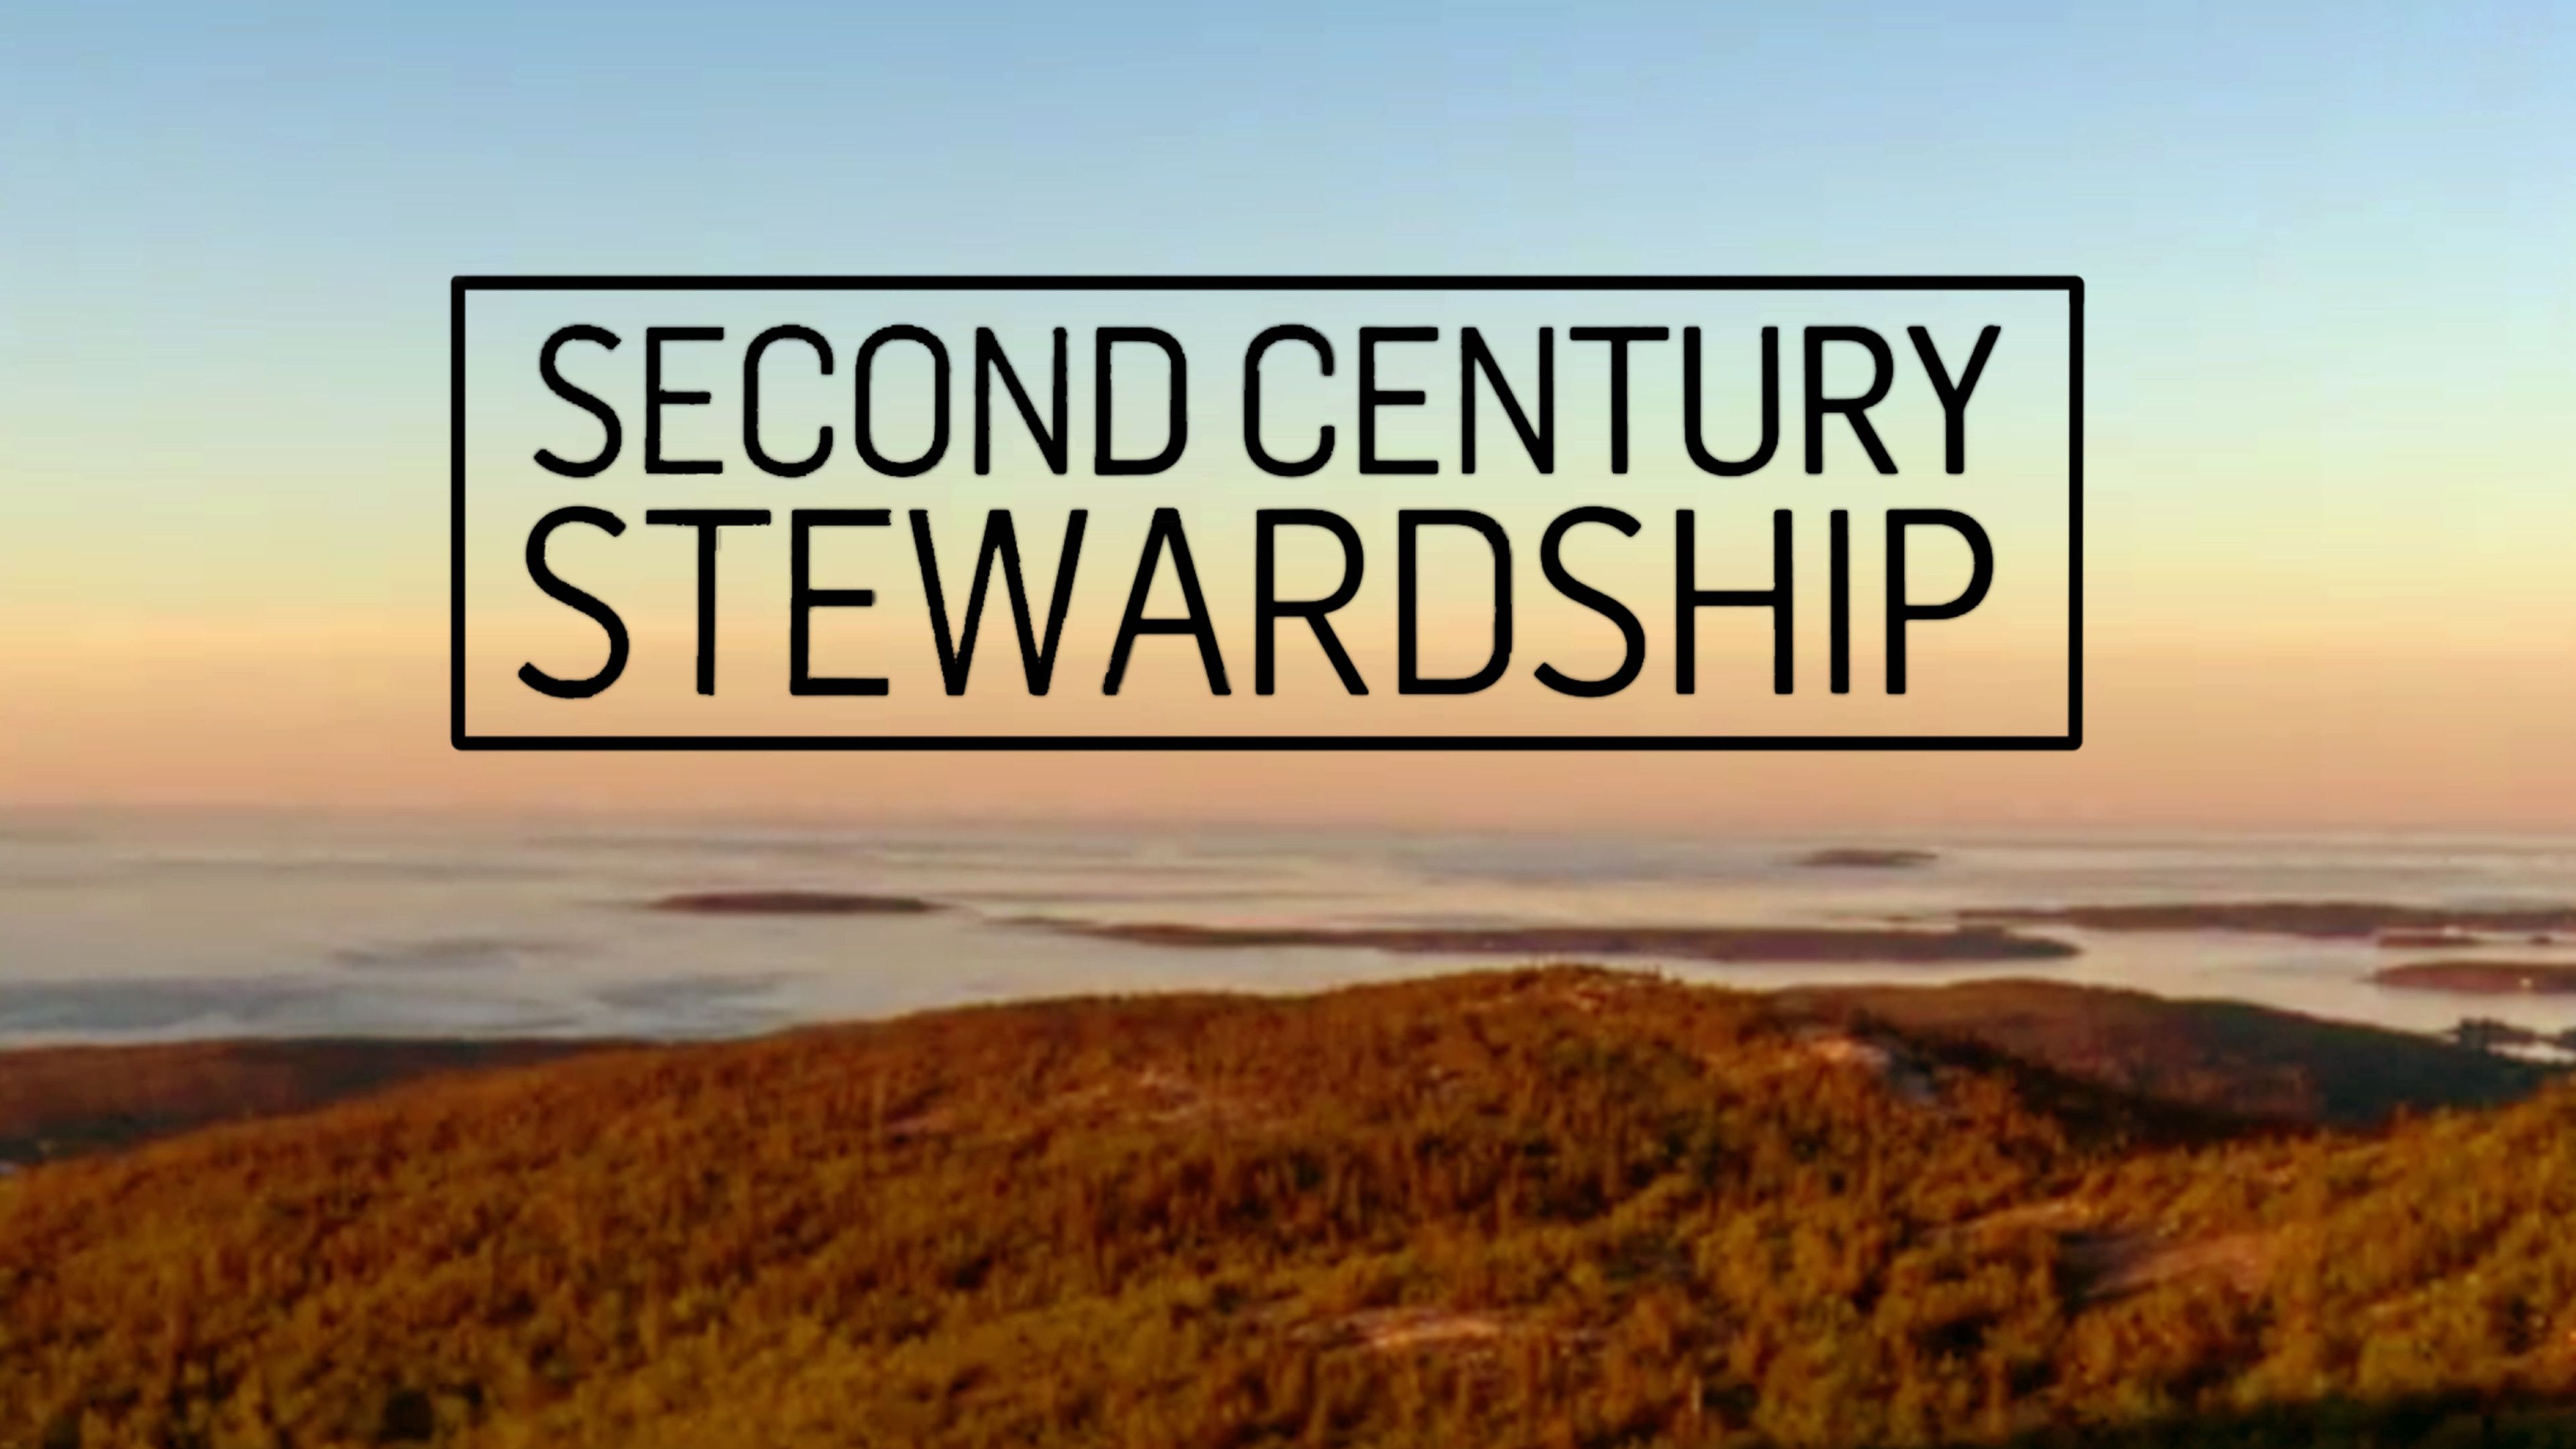 Second Century Stewardship: Acadia National Park